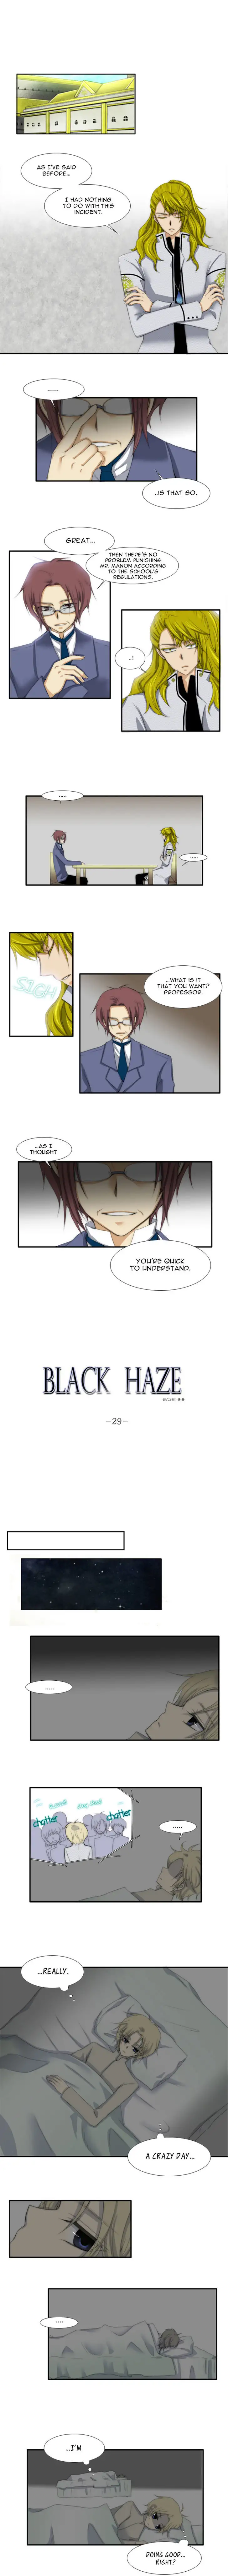 Black Haze - Chapter 29 Page 1